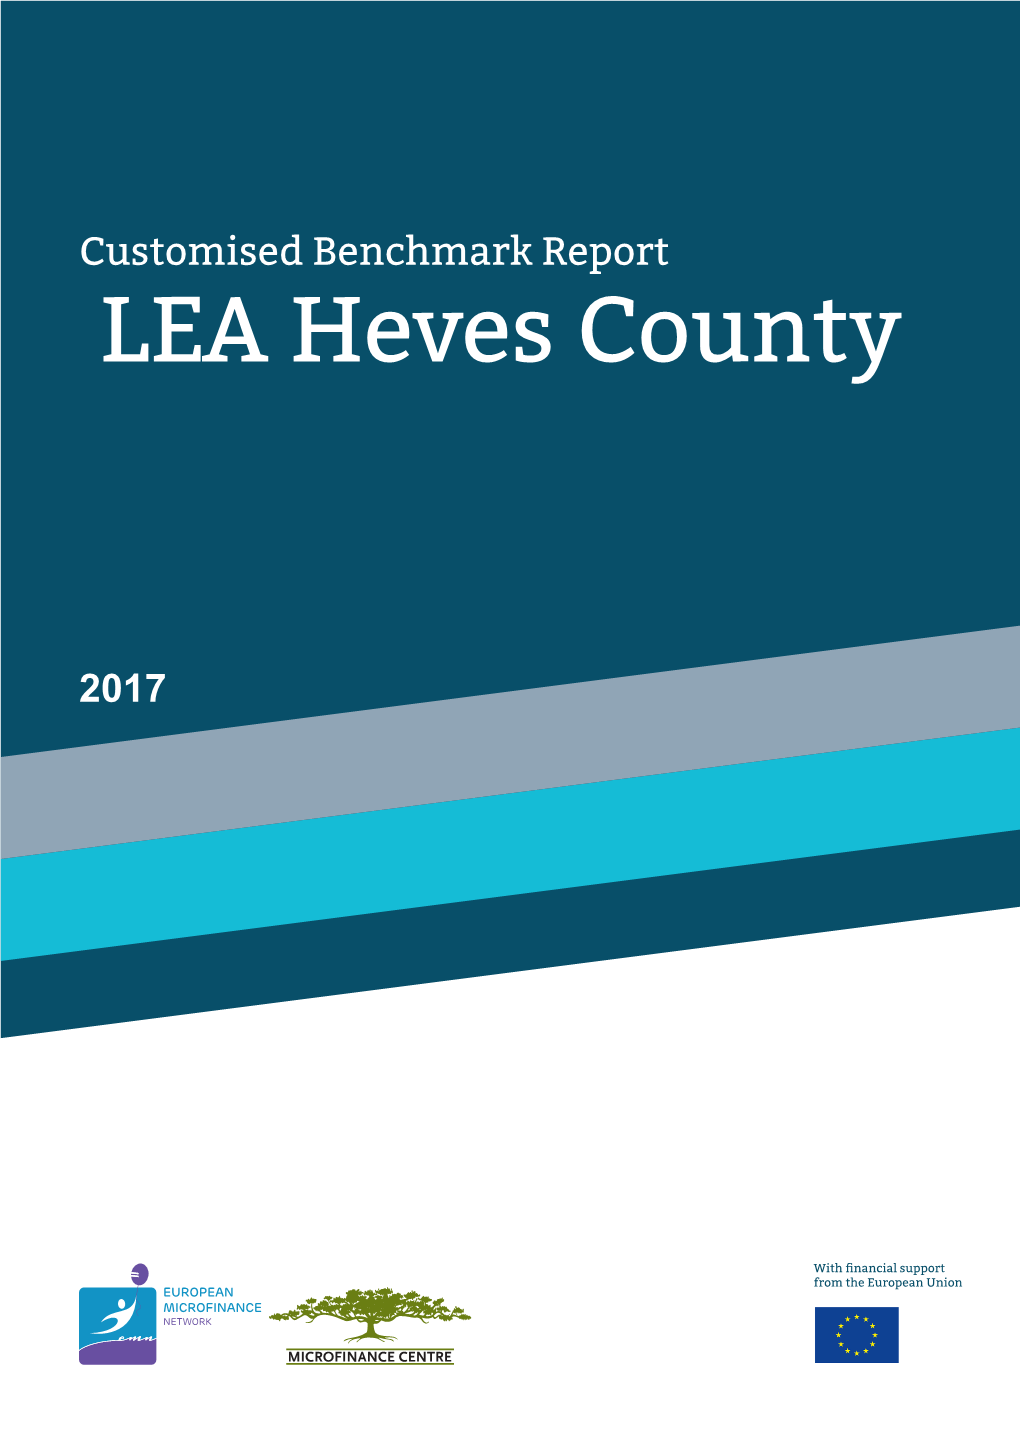 LEA Heves County